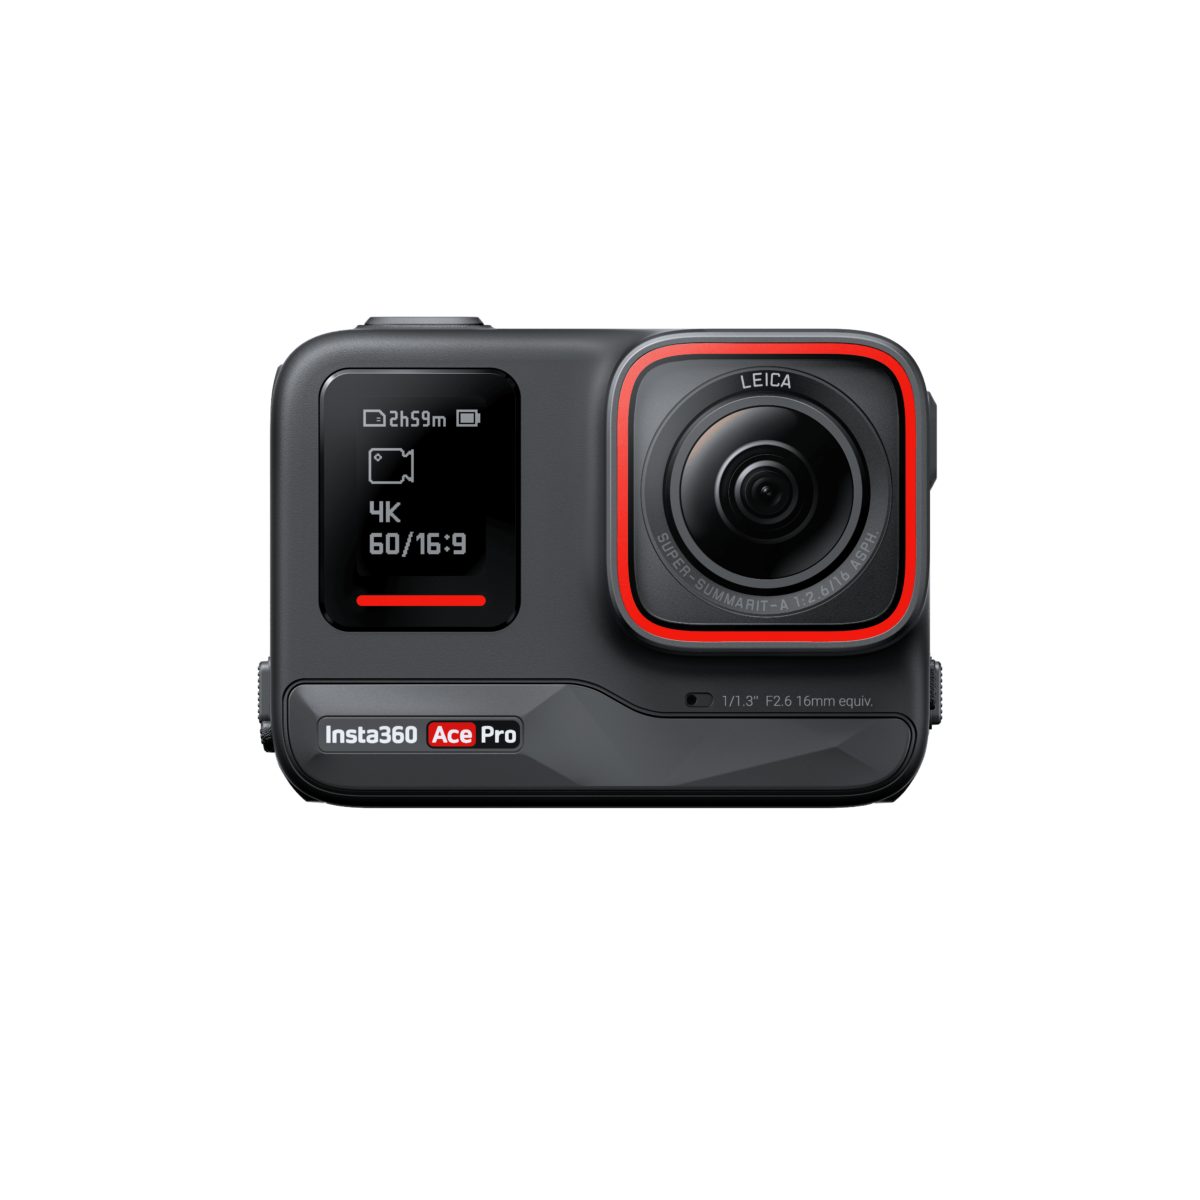 Insta360 Ace Pro - Smart Action Camera 1/1.3, F2.6, 48MP 8k Video - Insta360 2.35.72.00.011